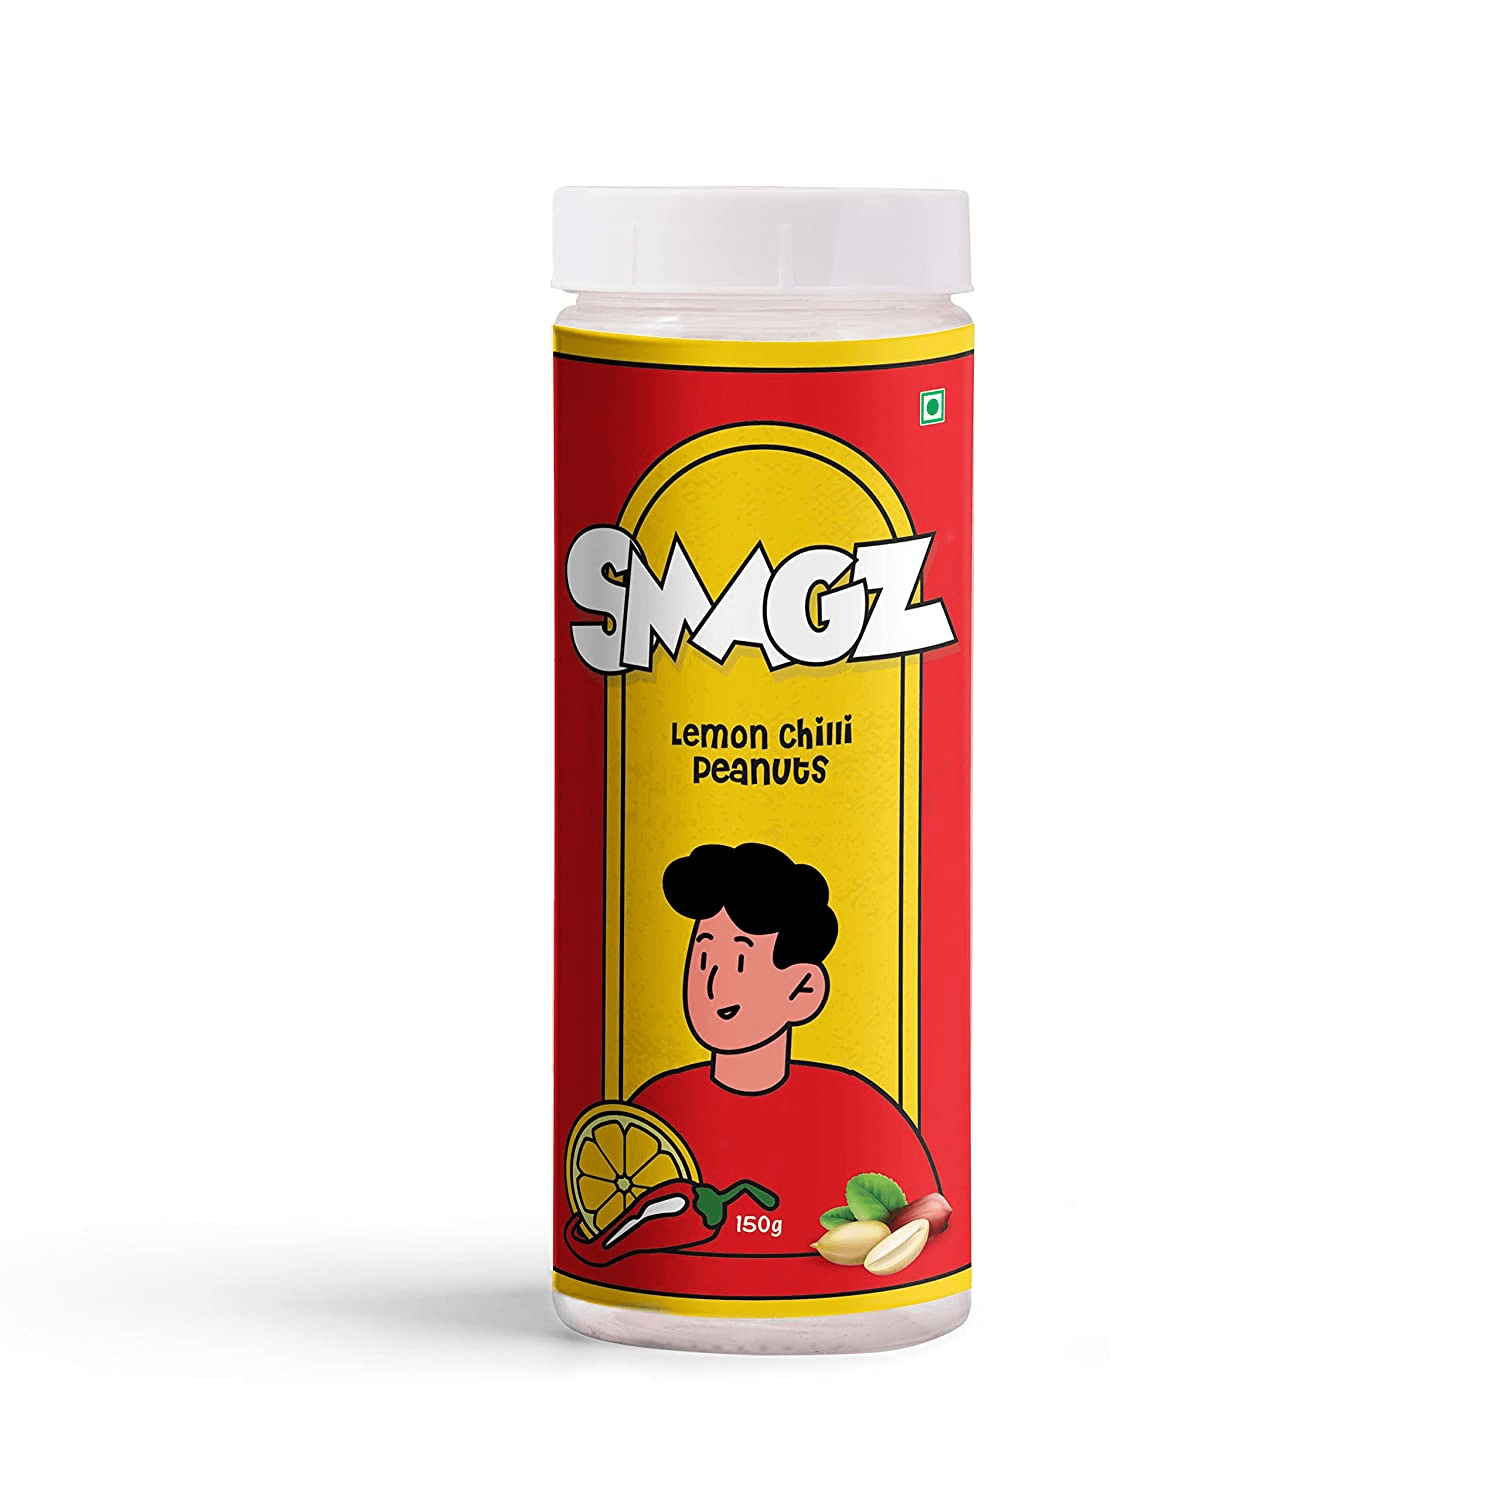 SMAGZ Lemon Chilli Peanut Healthy Namkeen and Snacks